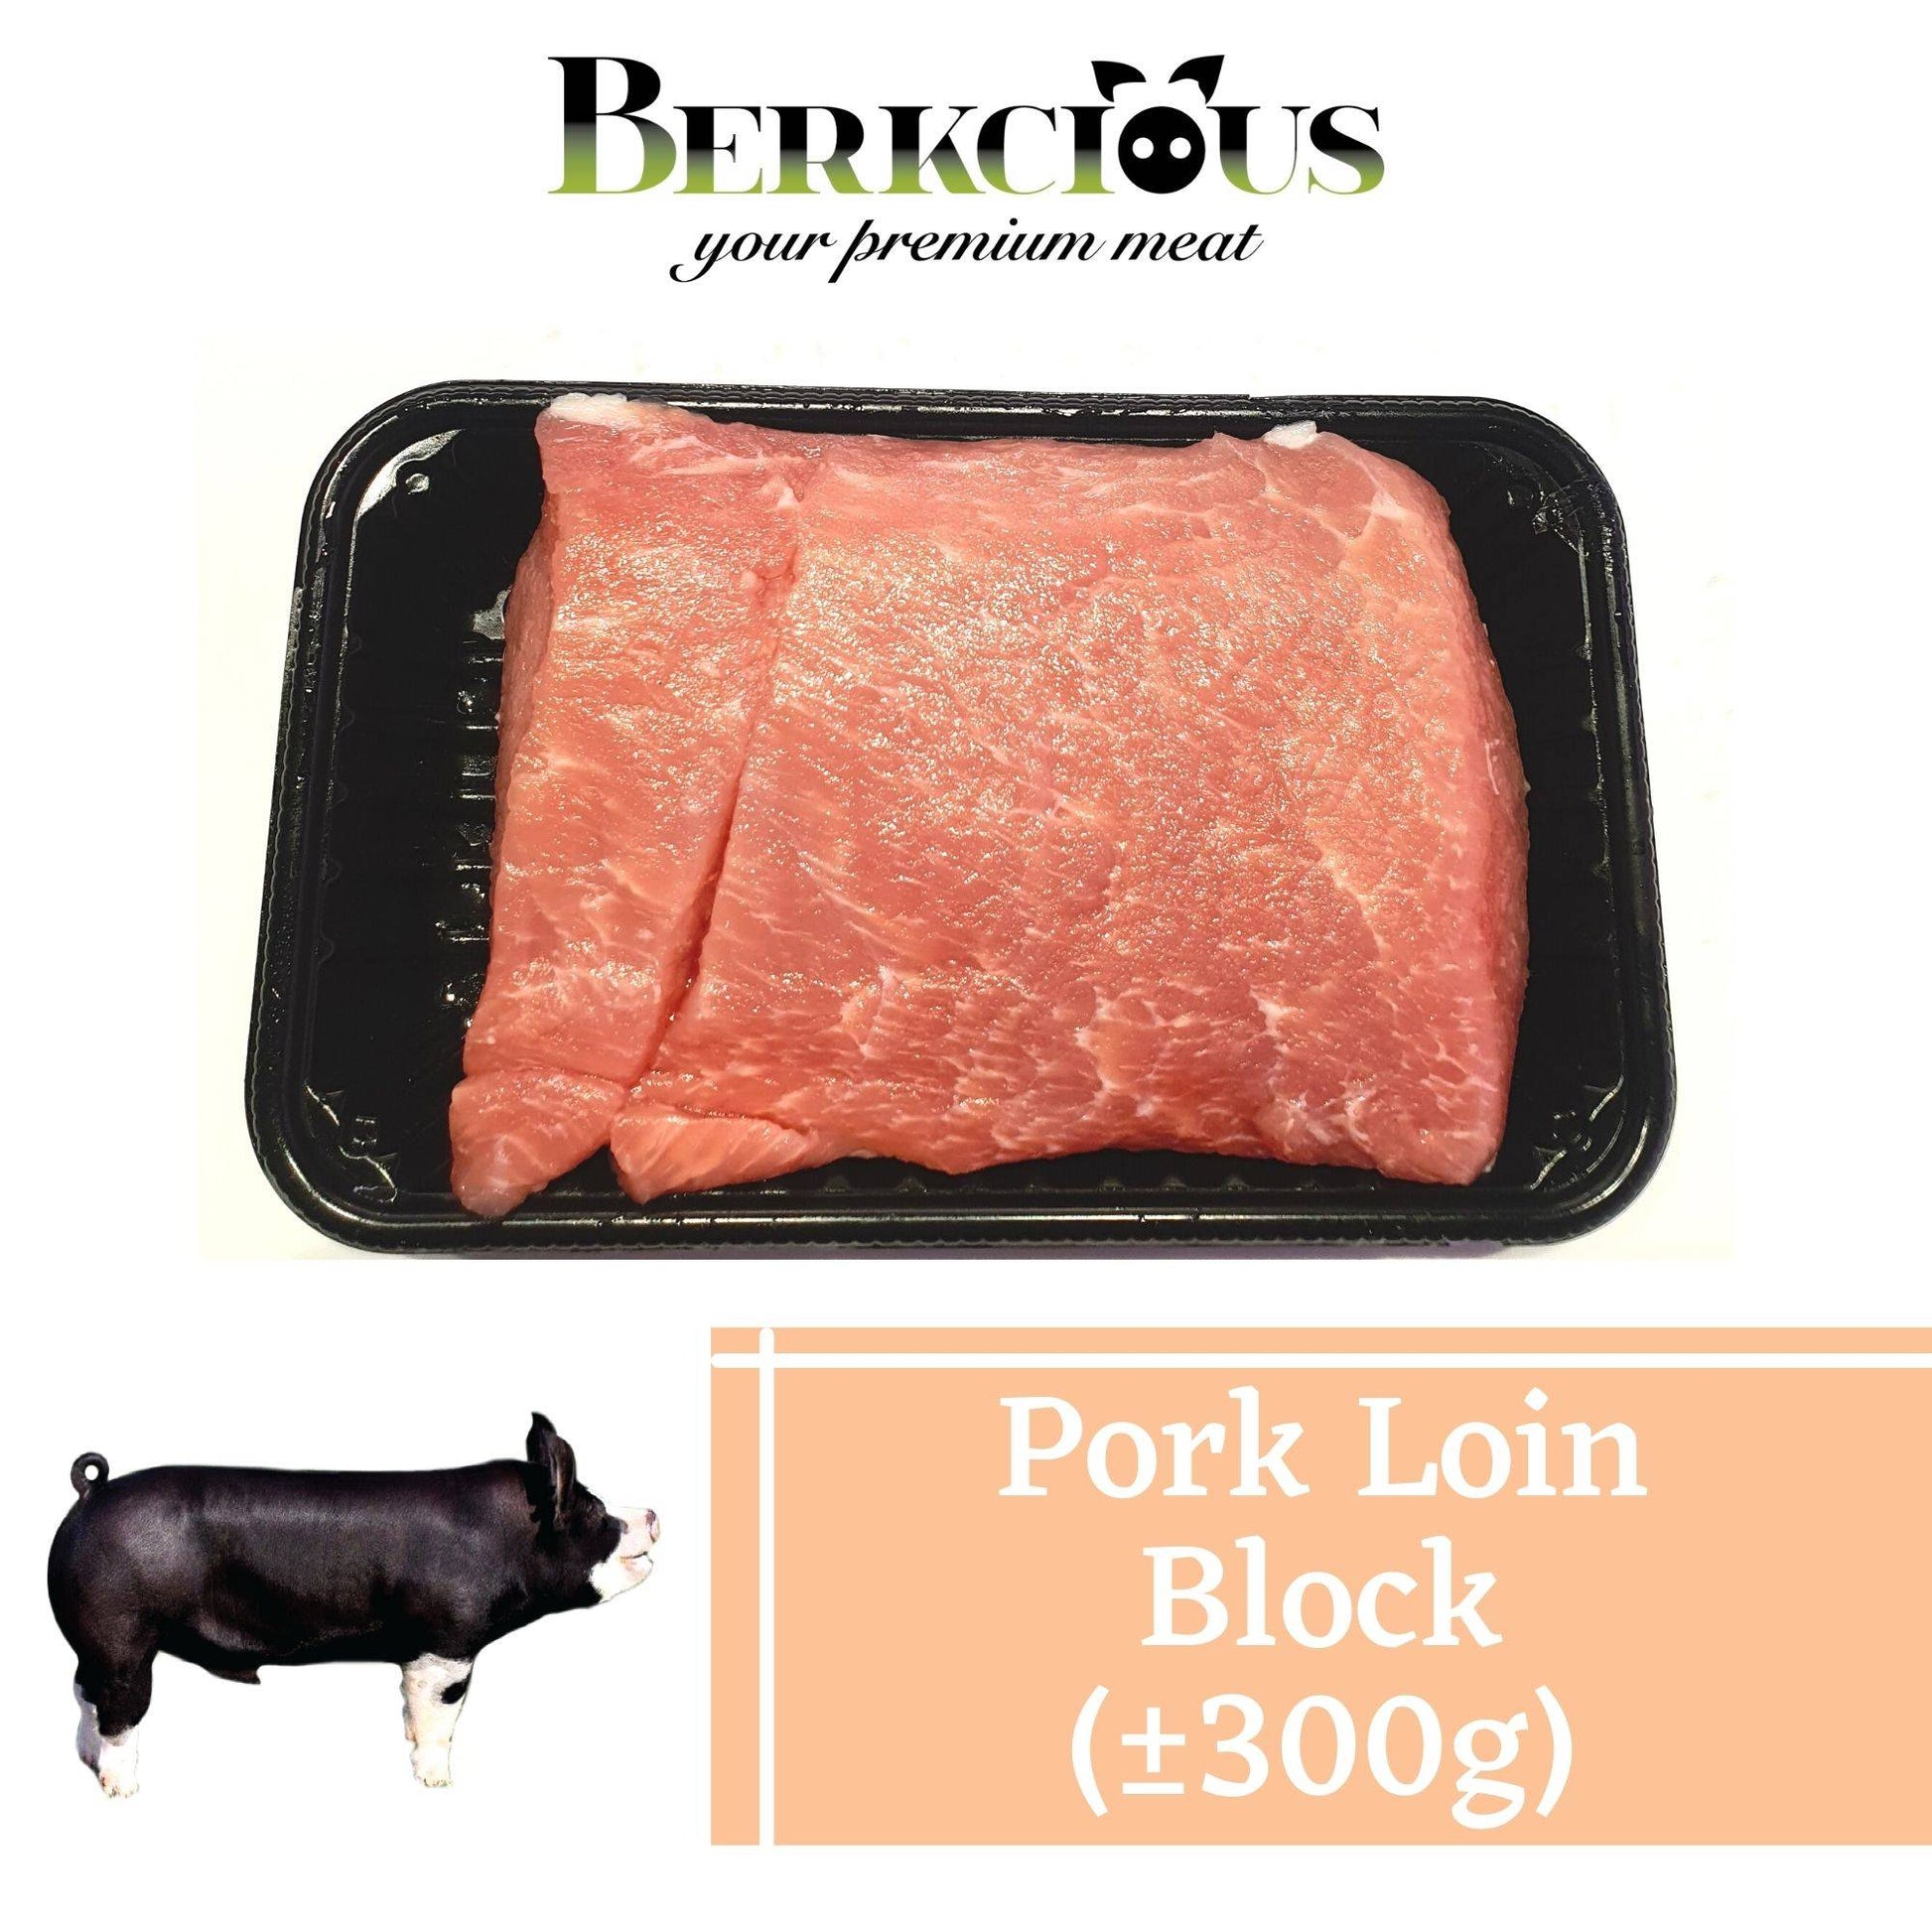 Berkcious Free Range Black Pork - Loin Block / 放养黑猪-肉眼 (300g) - Fish Club